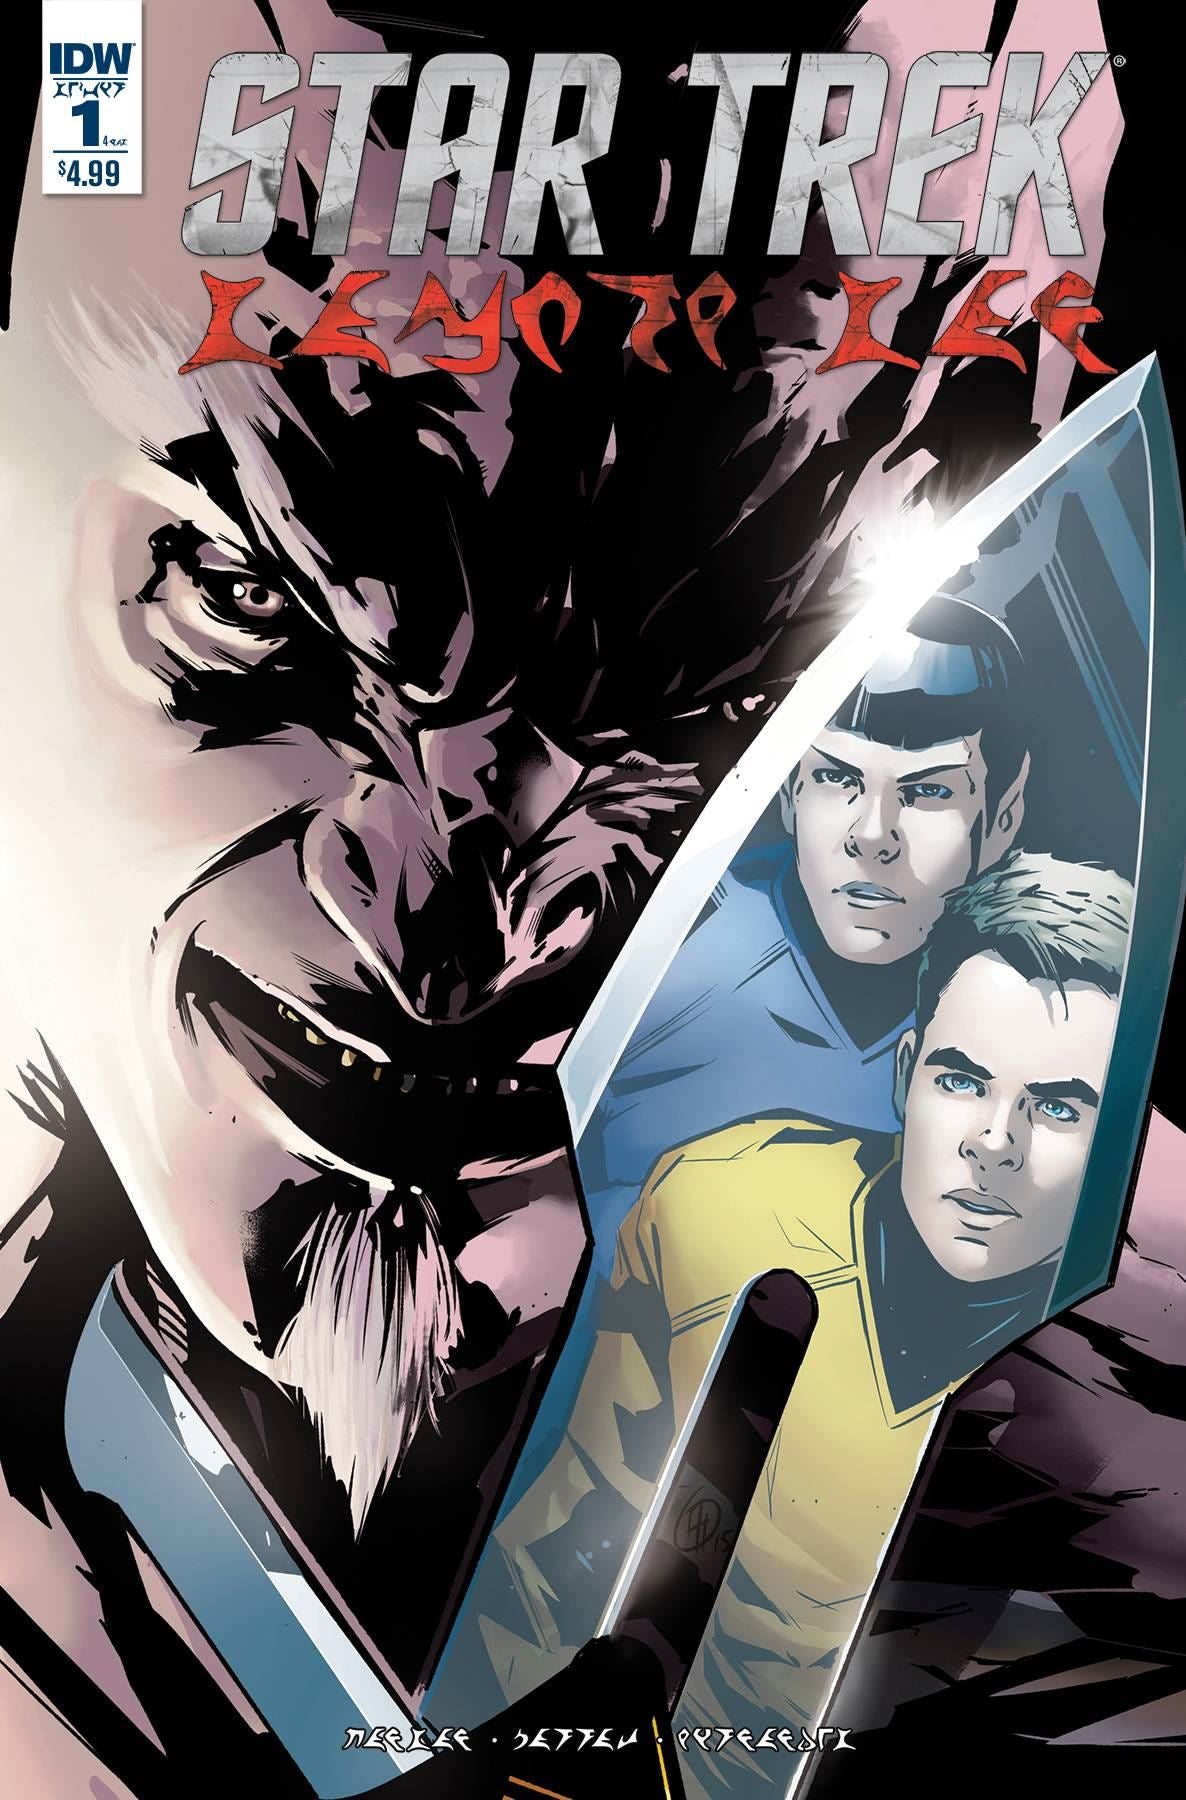 Star Trek Manifest Destiny Klingon Ed #1 () Idw Publishing Comic Book